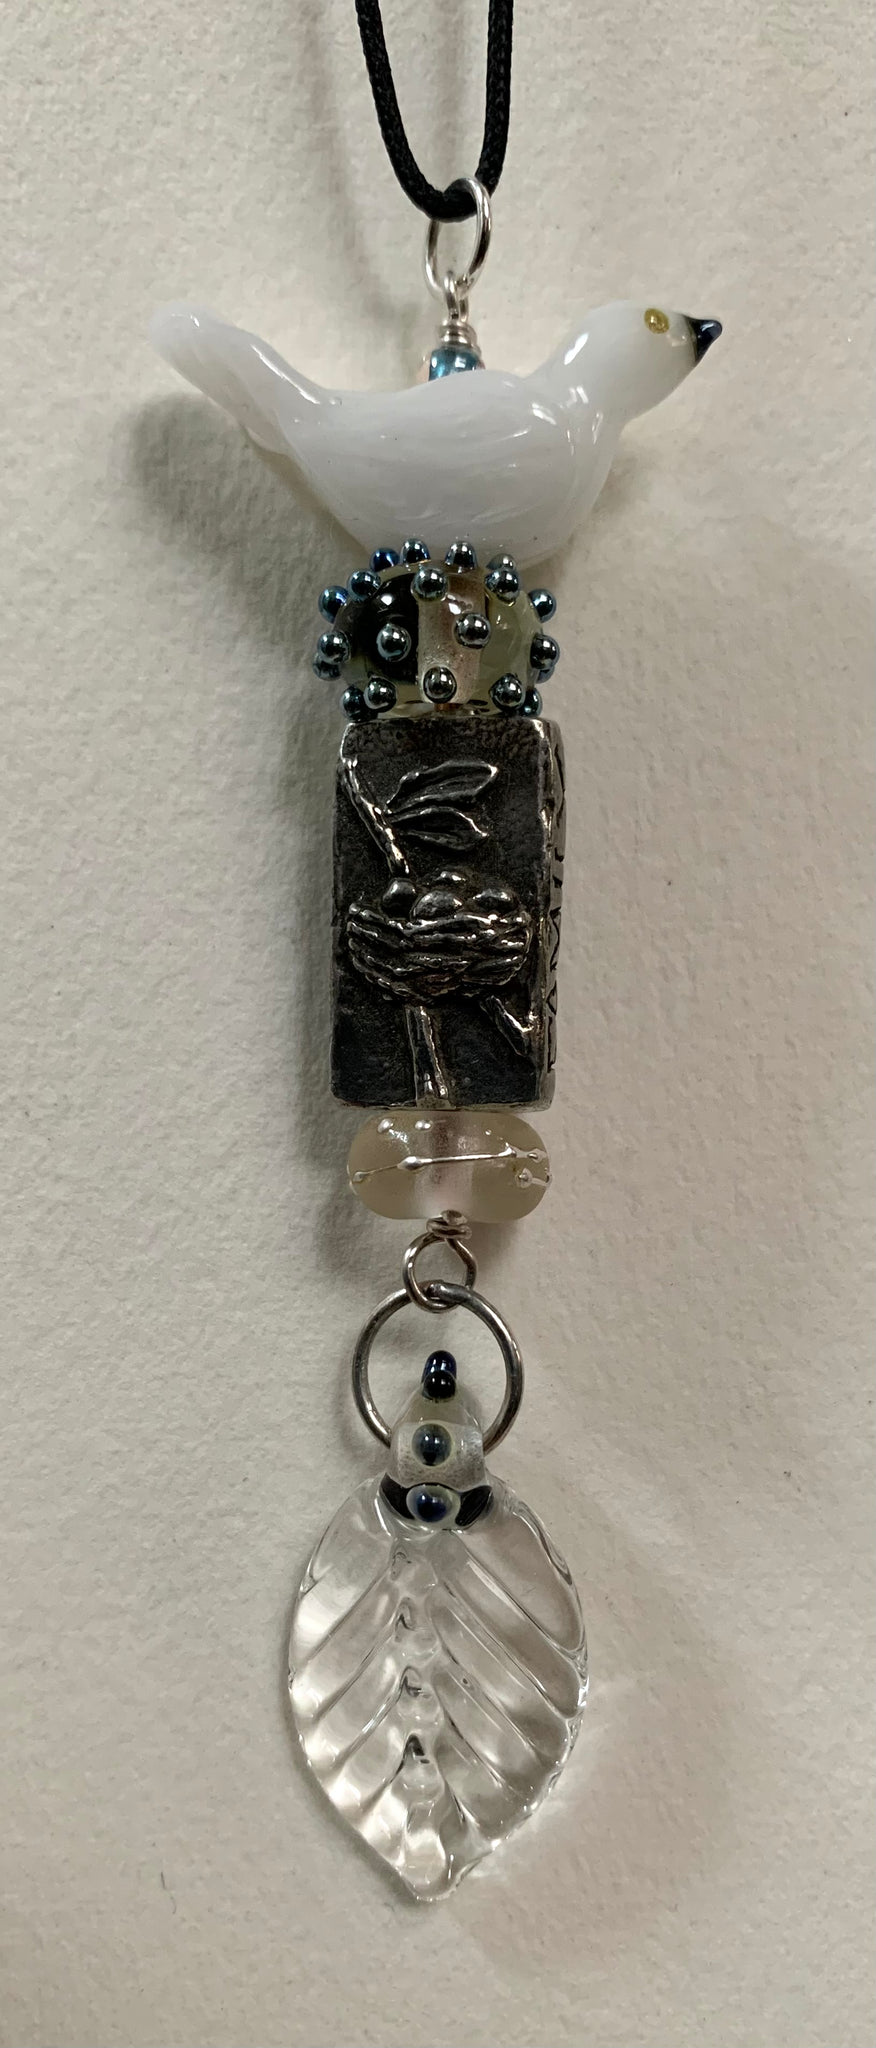 White bird pendant with pewter Family/Home bead